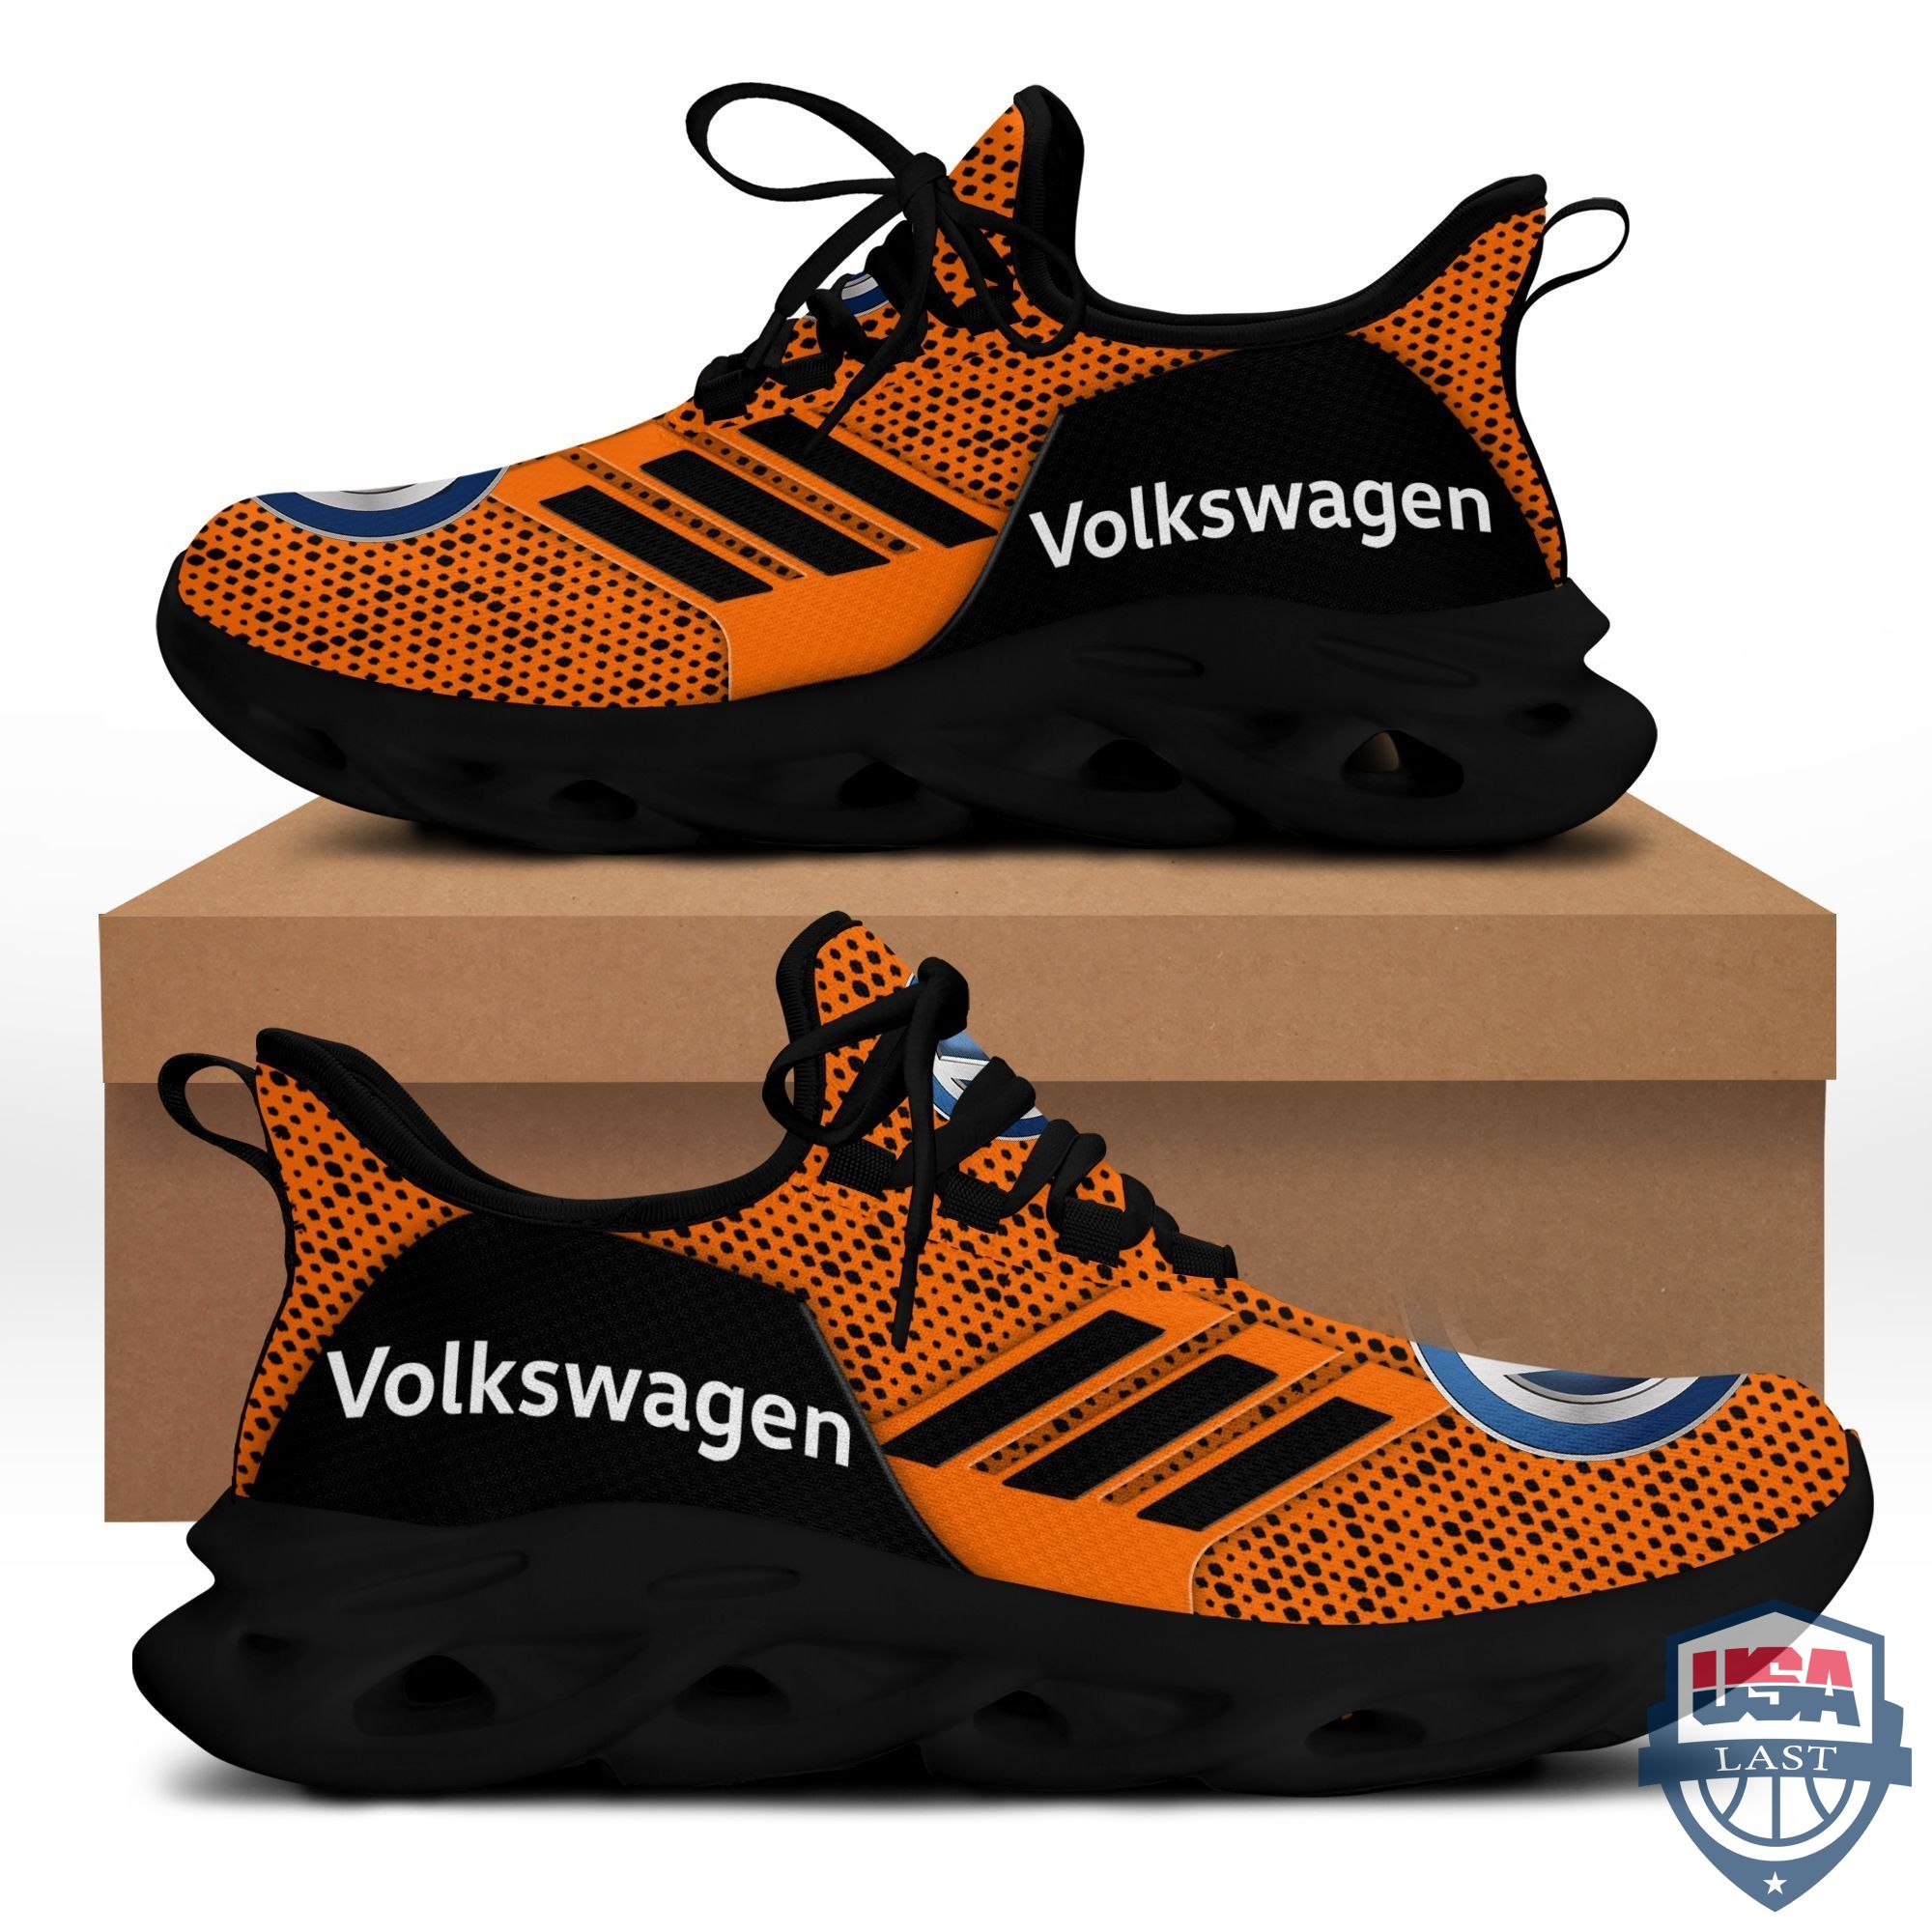 Volkswagen Sneaker Max Soul Shoes Orange Version